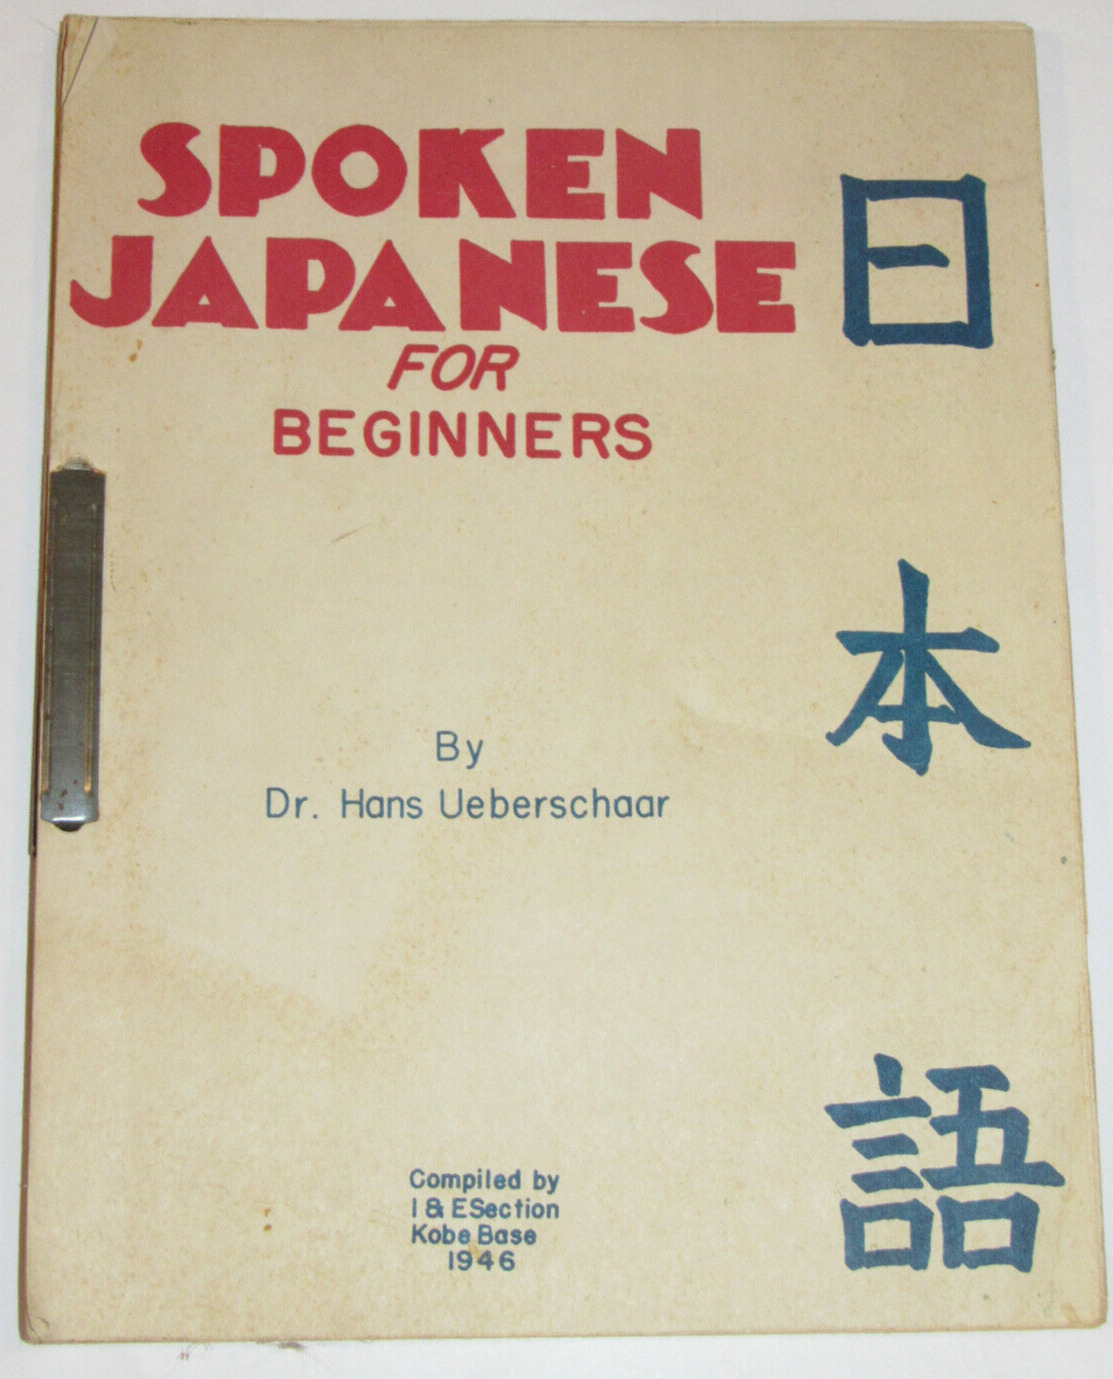 VTG 1946 'SPOKEN JAPANESE FOR BEGINNERS' BOOK US ARMY OCCUPIED JAPAN I&E SEC